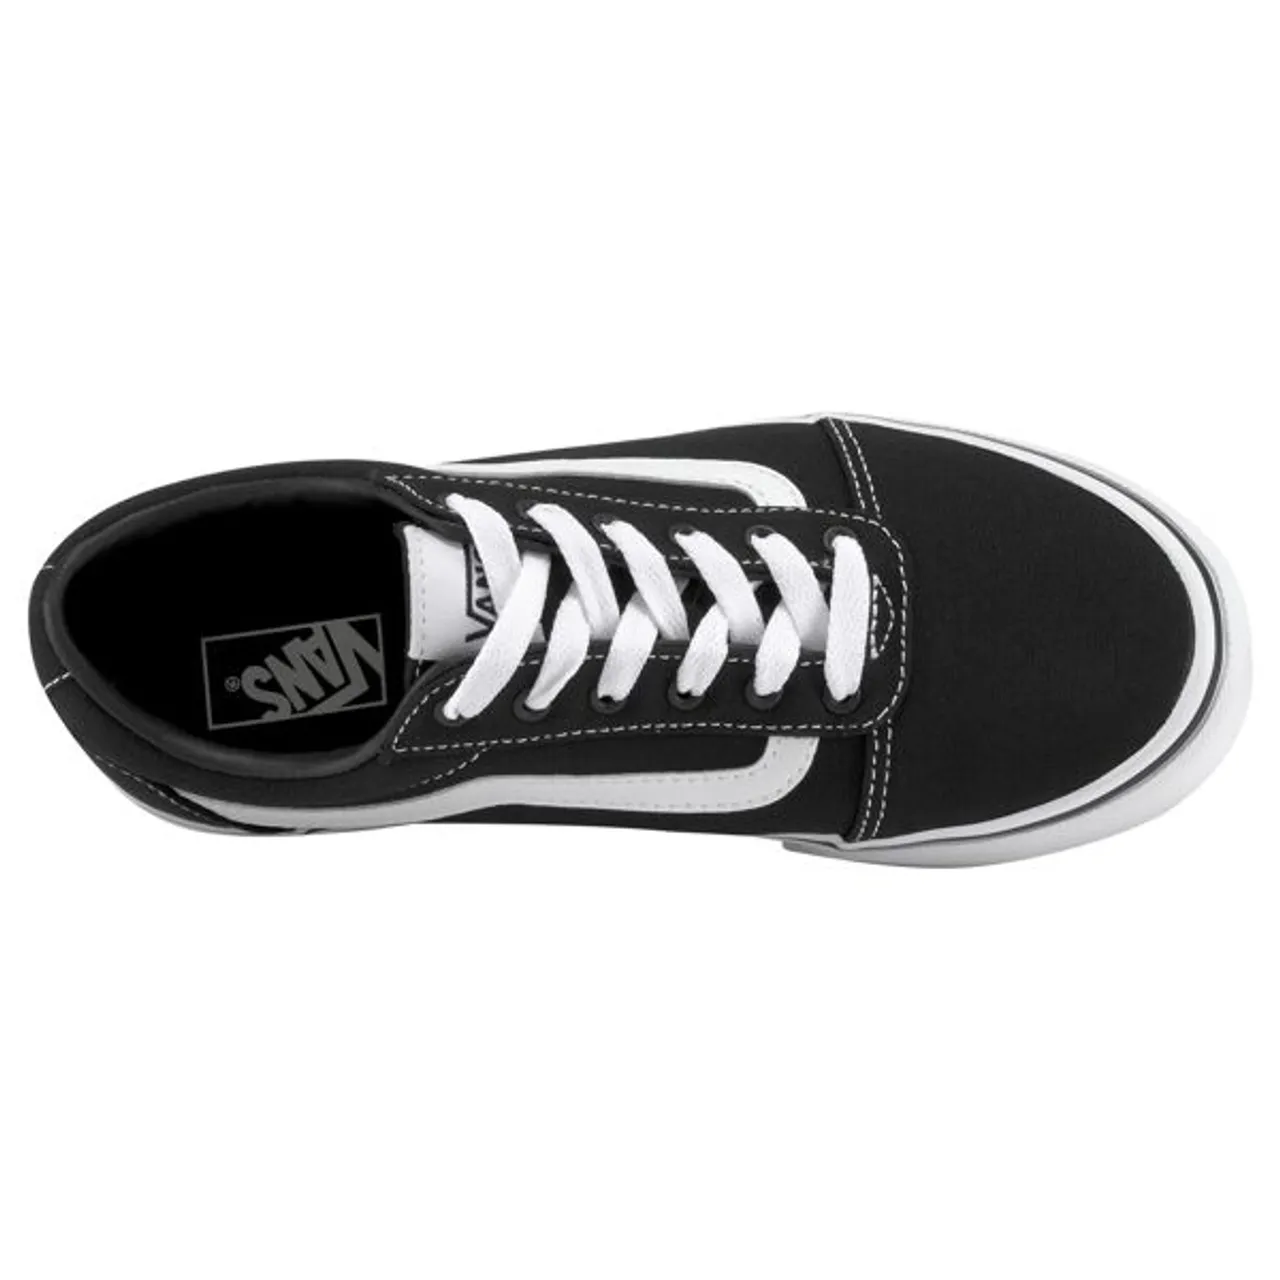 Plateausneaker VANS "Ward Platform" Gr. 31, schwarz-weiß (schwarz, weiß) Schuhe Skaterschuh Canvassneaker Sneaker low